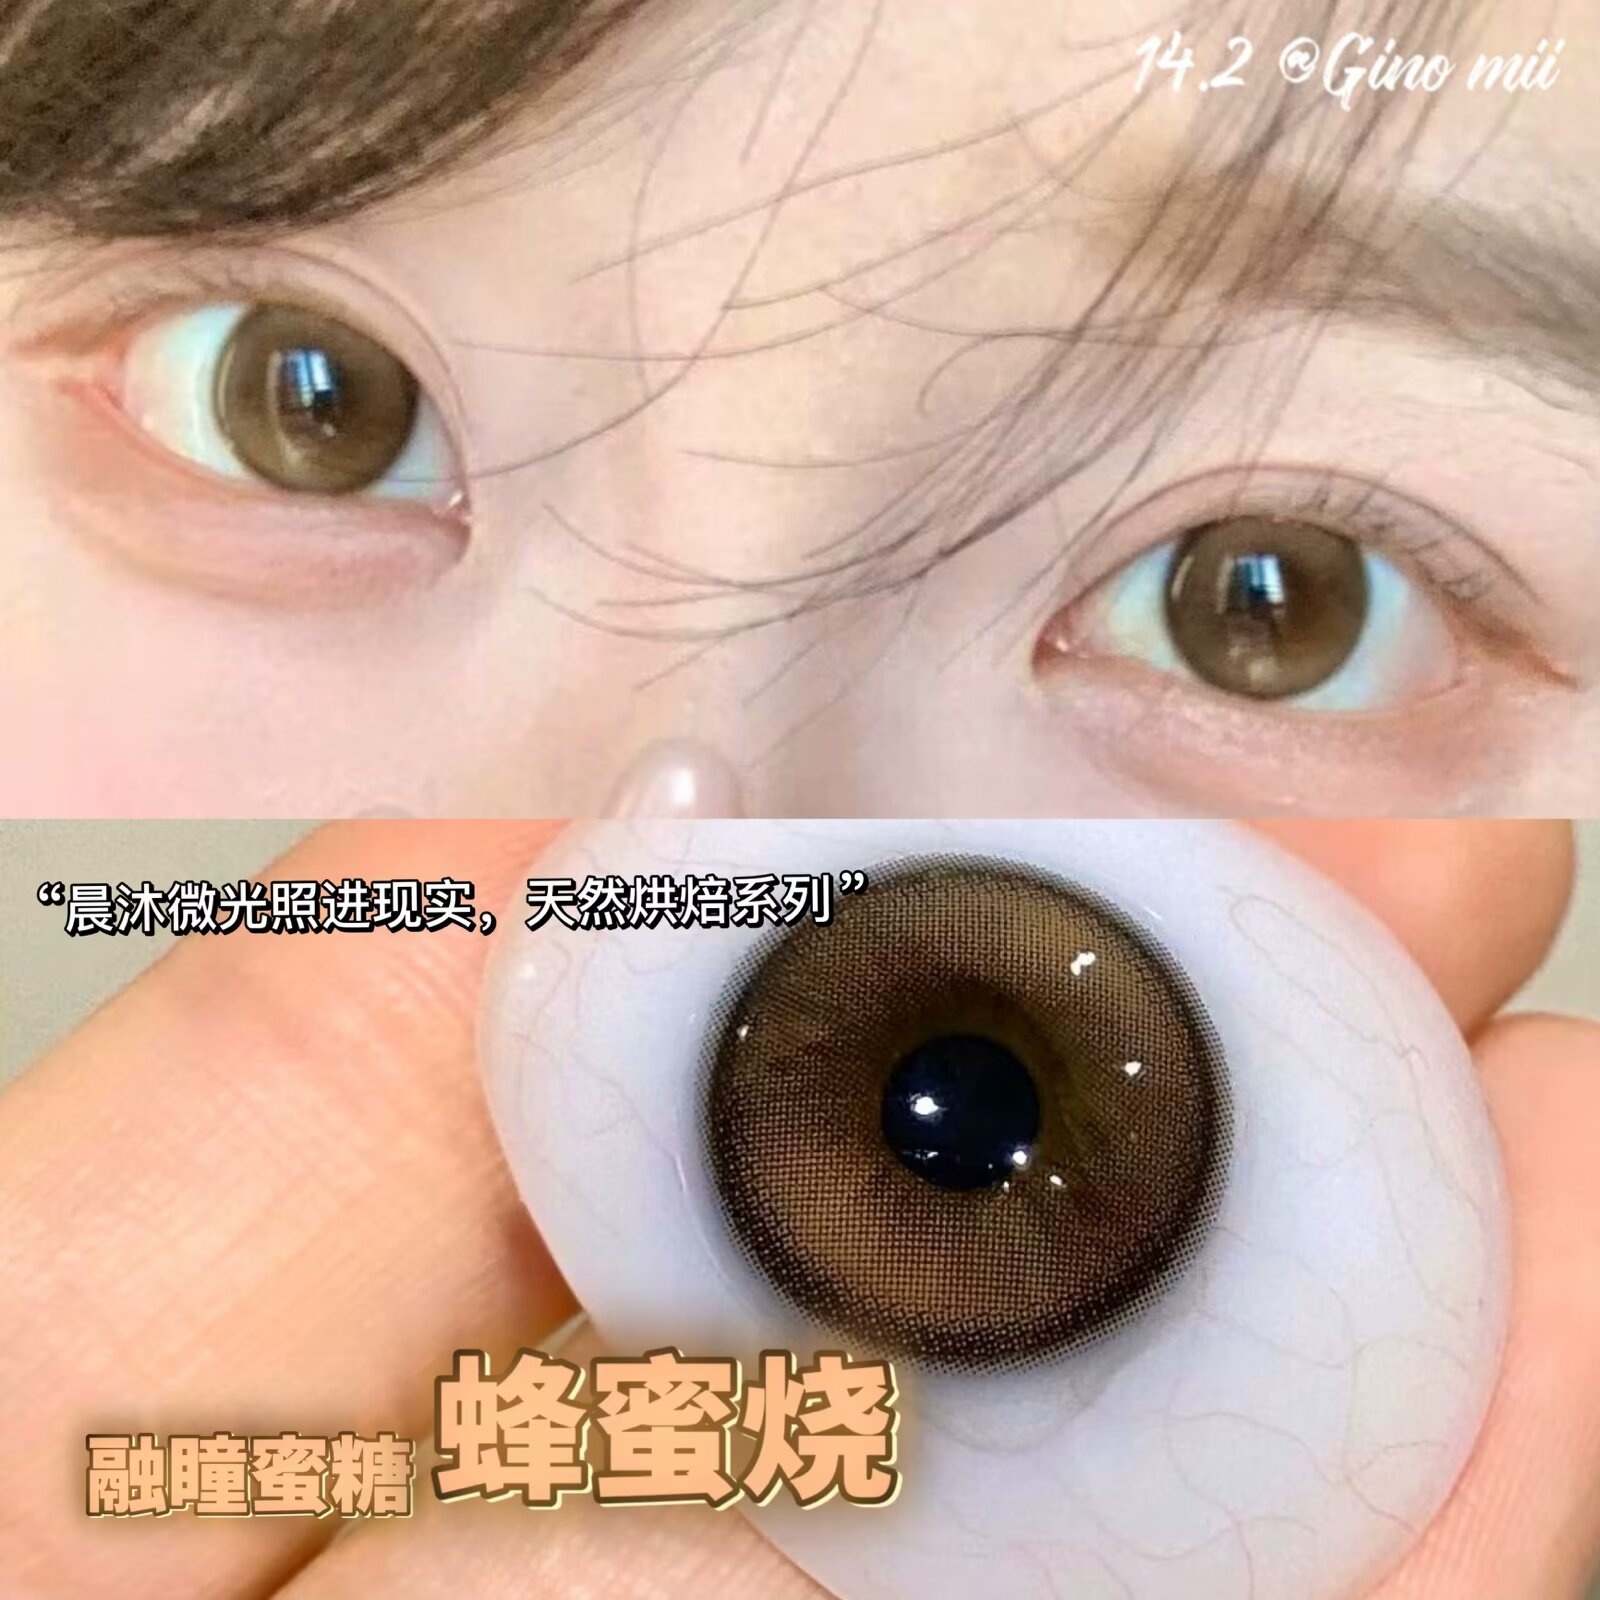 GINOMII 蜂蜜烧14.2mm 半年抛彩色隐形眼镜 1副/2片 左右眼度数可不同 - VVCON美瞳网